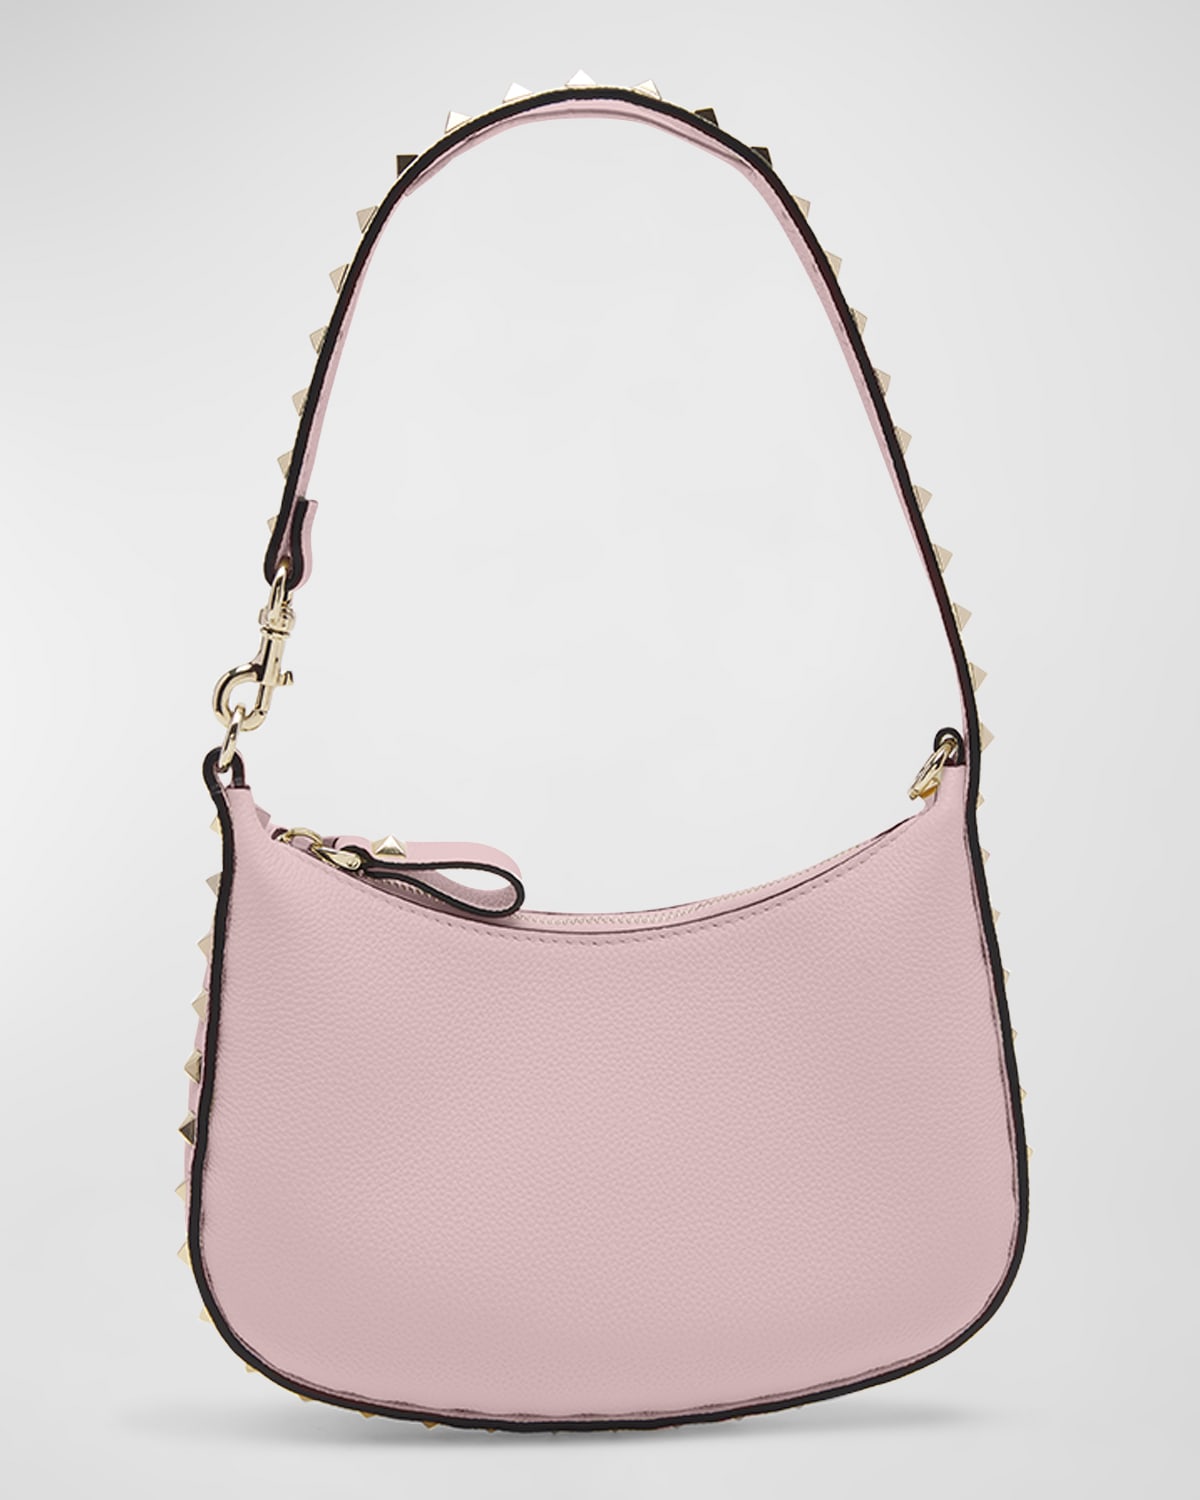 VALENTINO GARAVANI: Rockstud bag in grained leather - Blush Pink